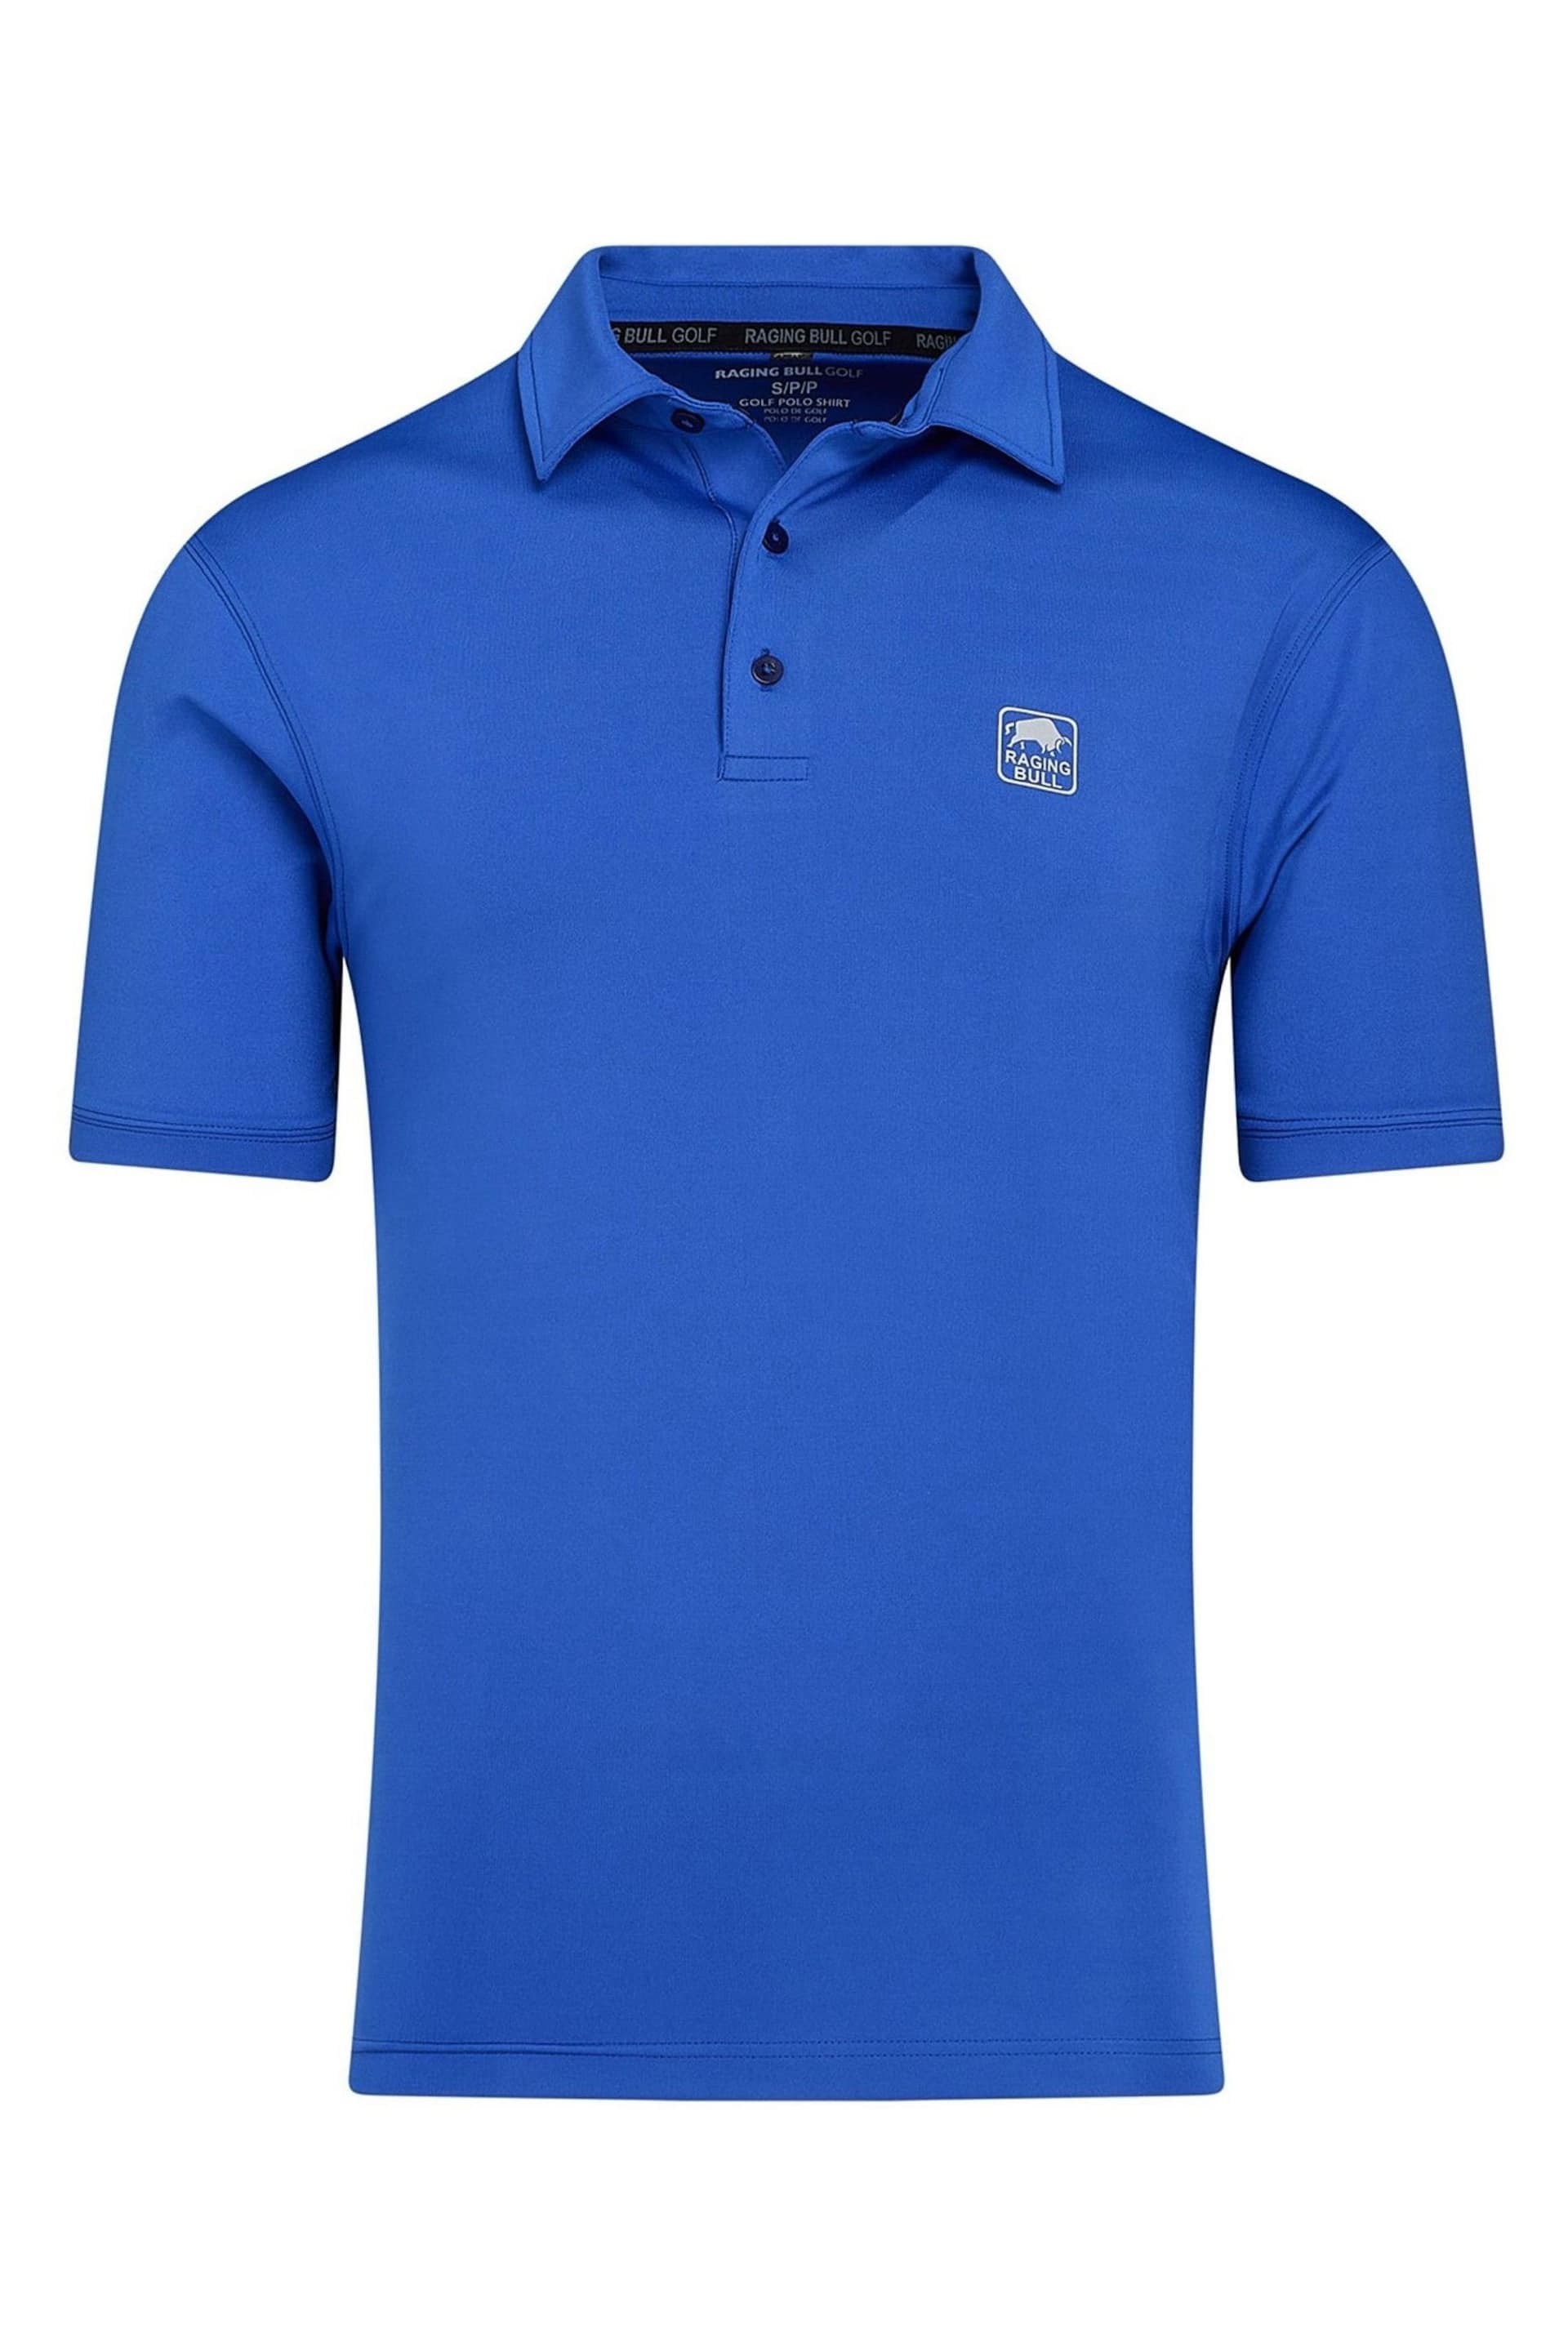 Raging Bull Blue Golf Tech Polo Shirt - Image 5 of 6